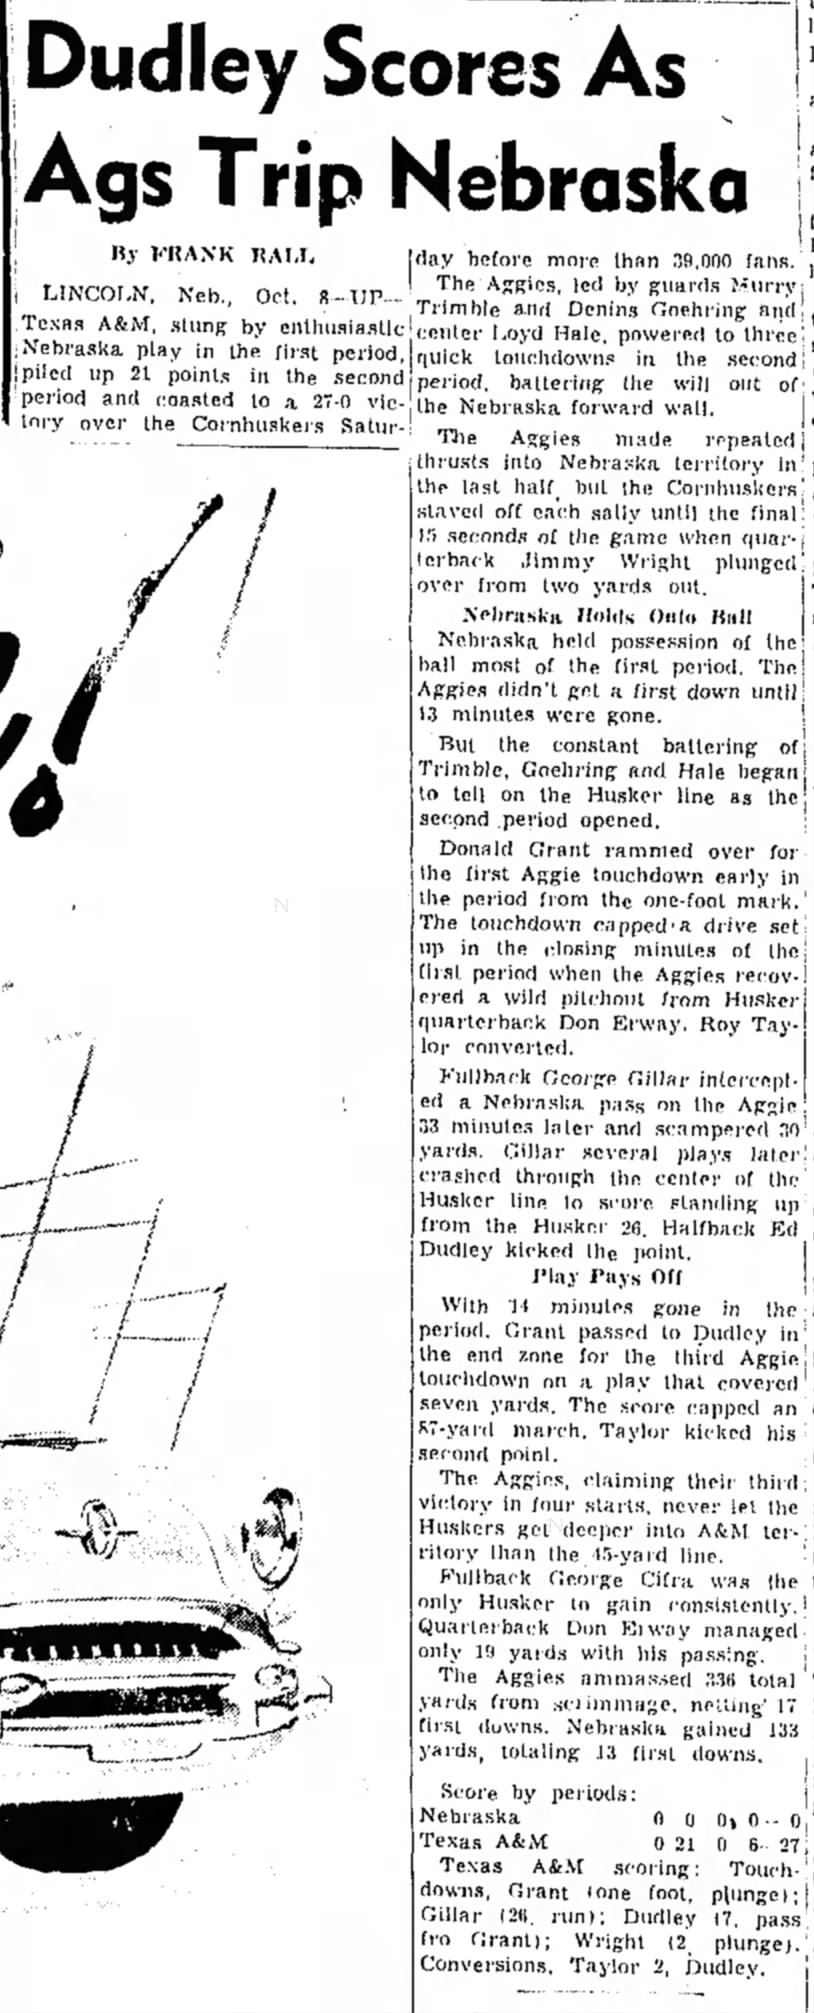 1955 Nebraska-Texas A&M football, UP story